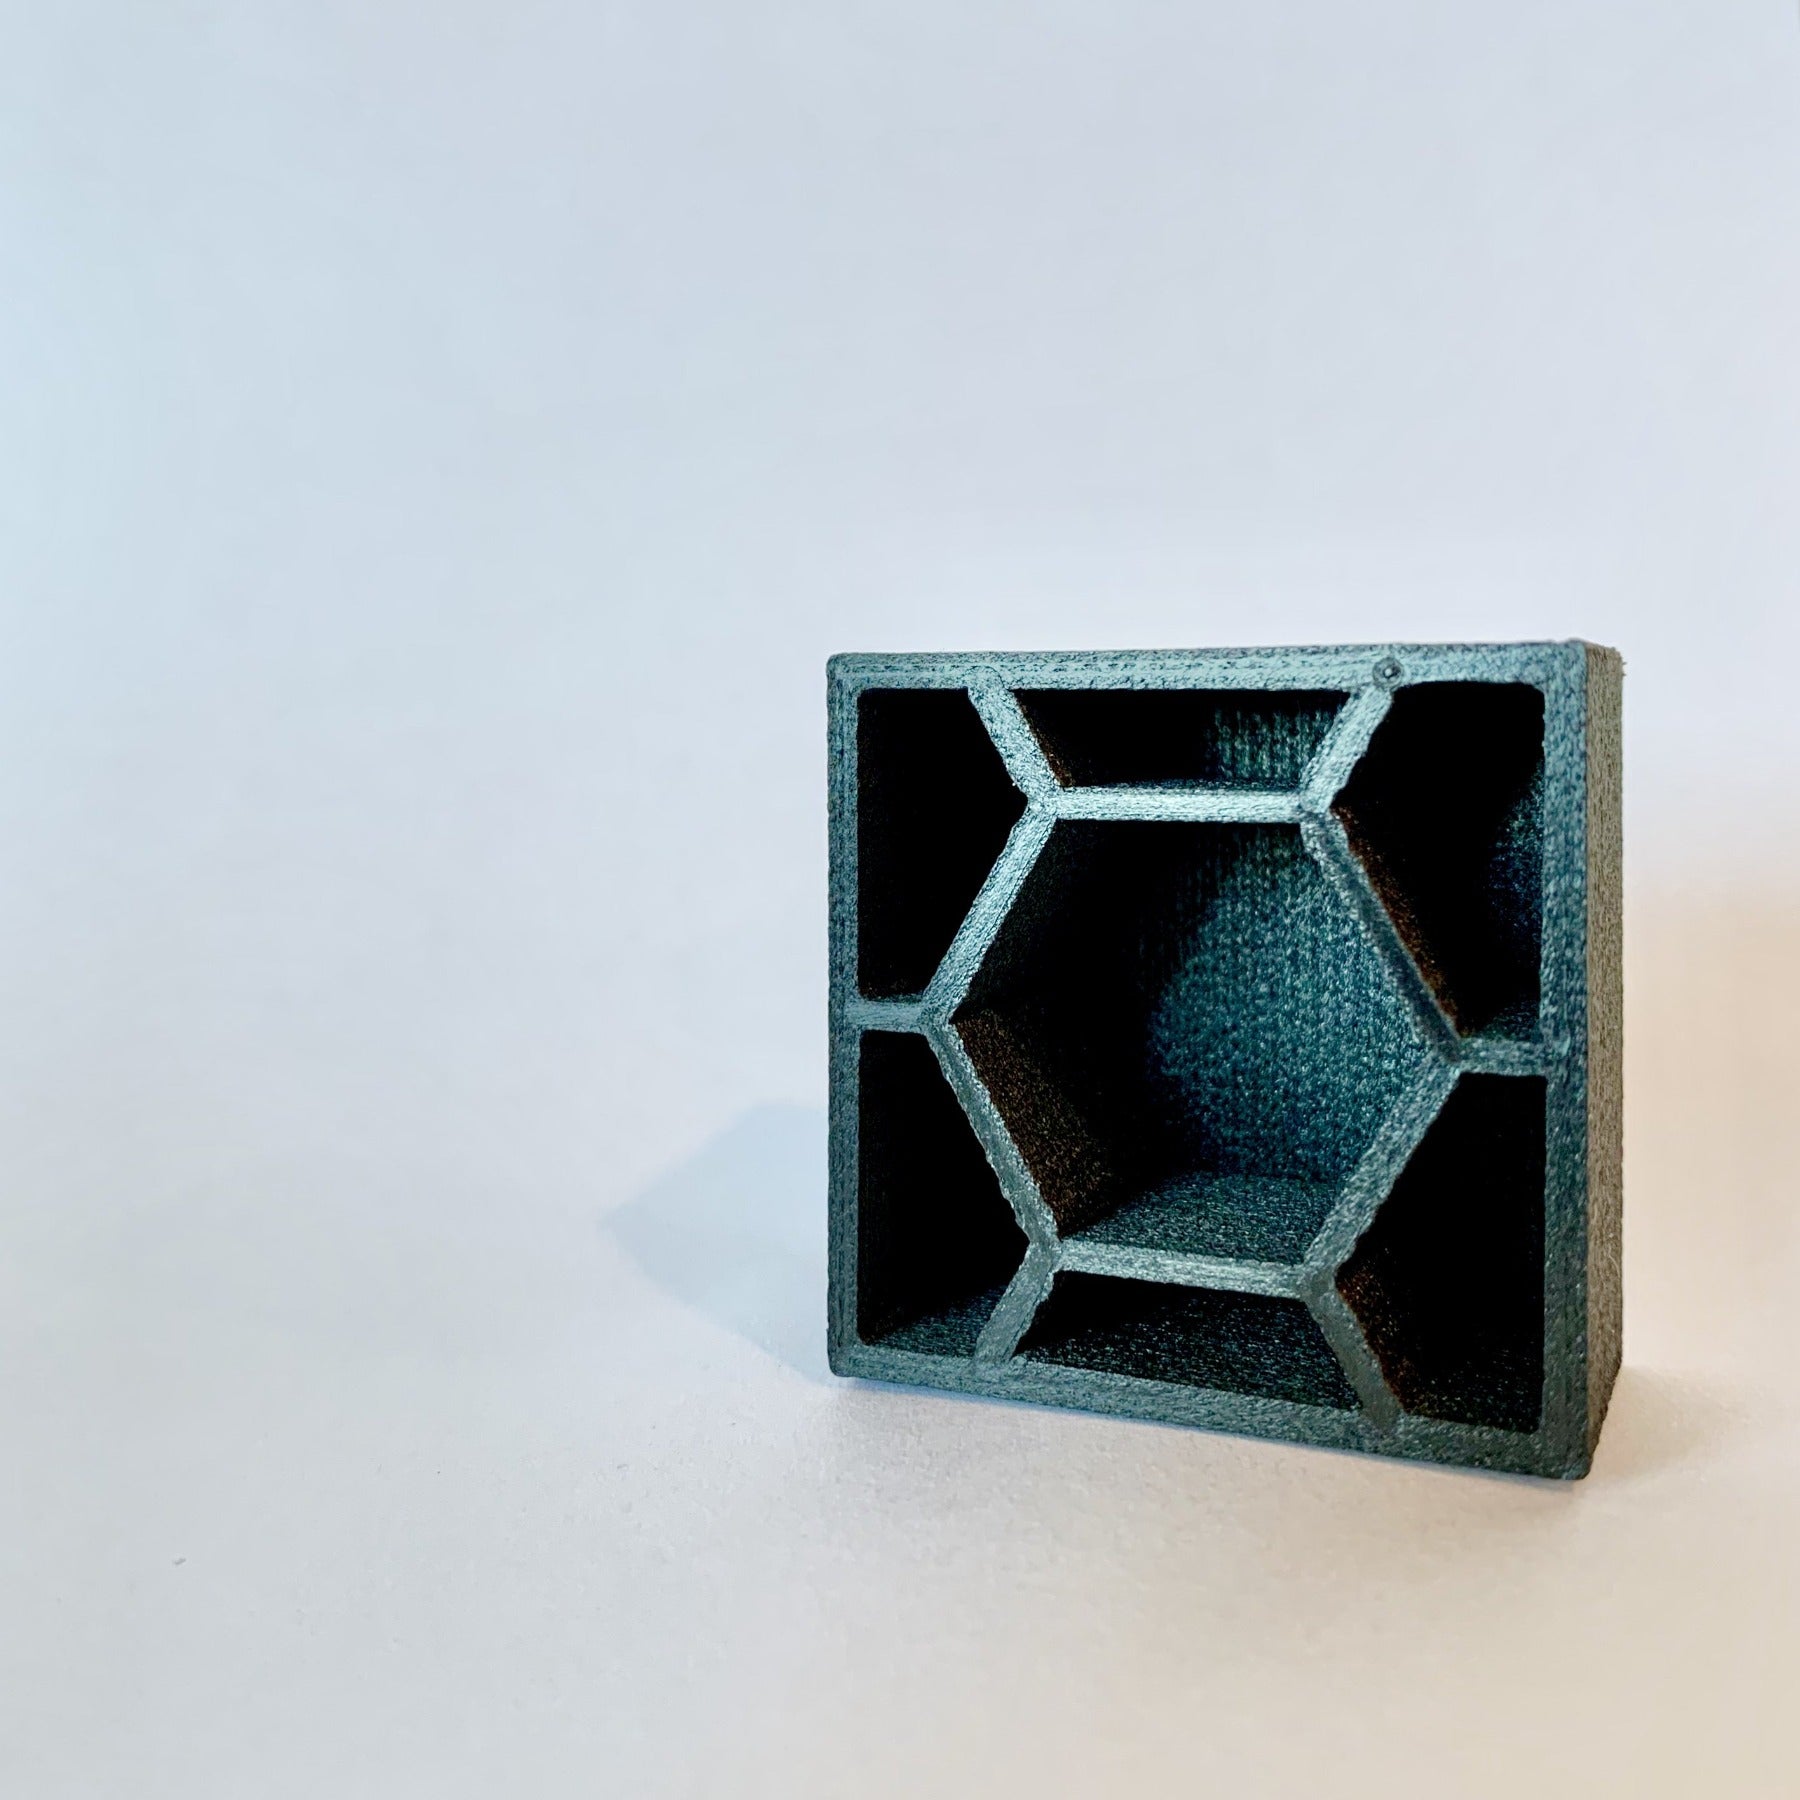 3D Printed Test Print Cube Example NylonPA12+CF15